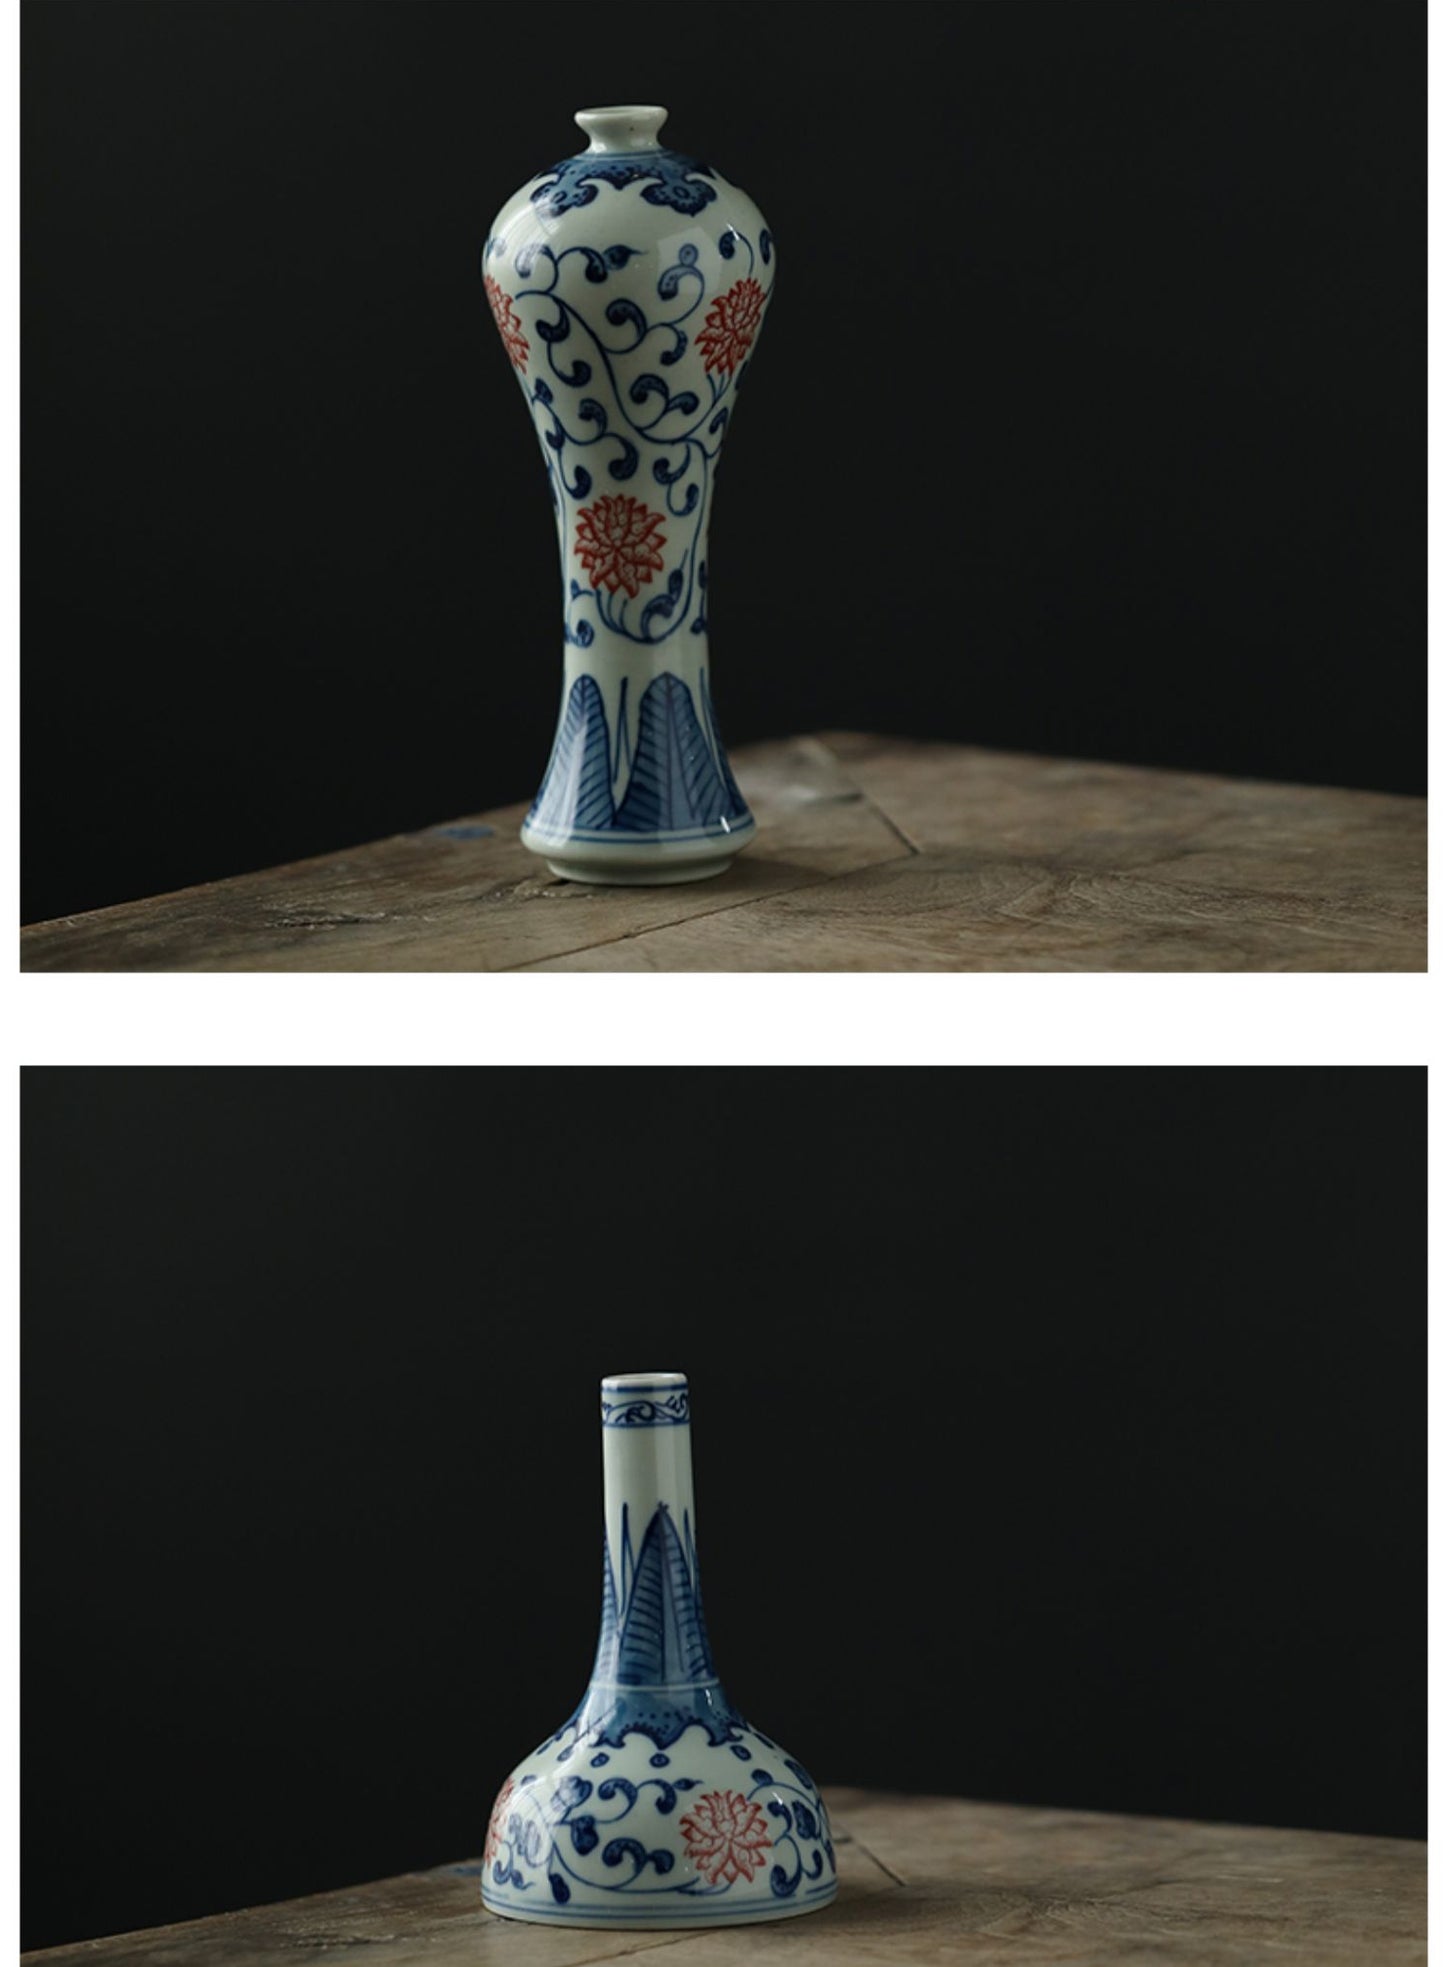 Gohobi Hand-painted Blue and White Porcelain Vase (Red Flowers)